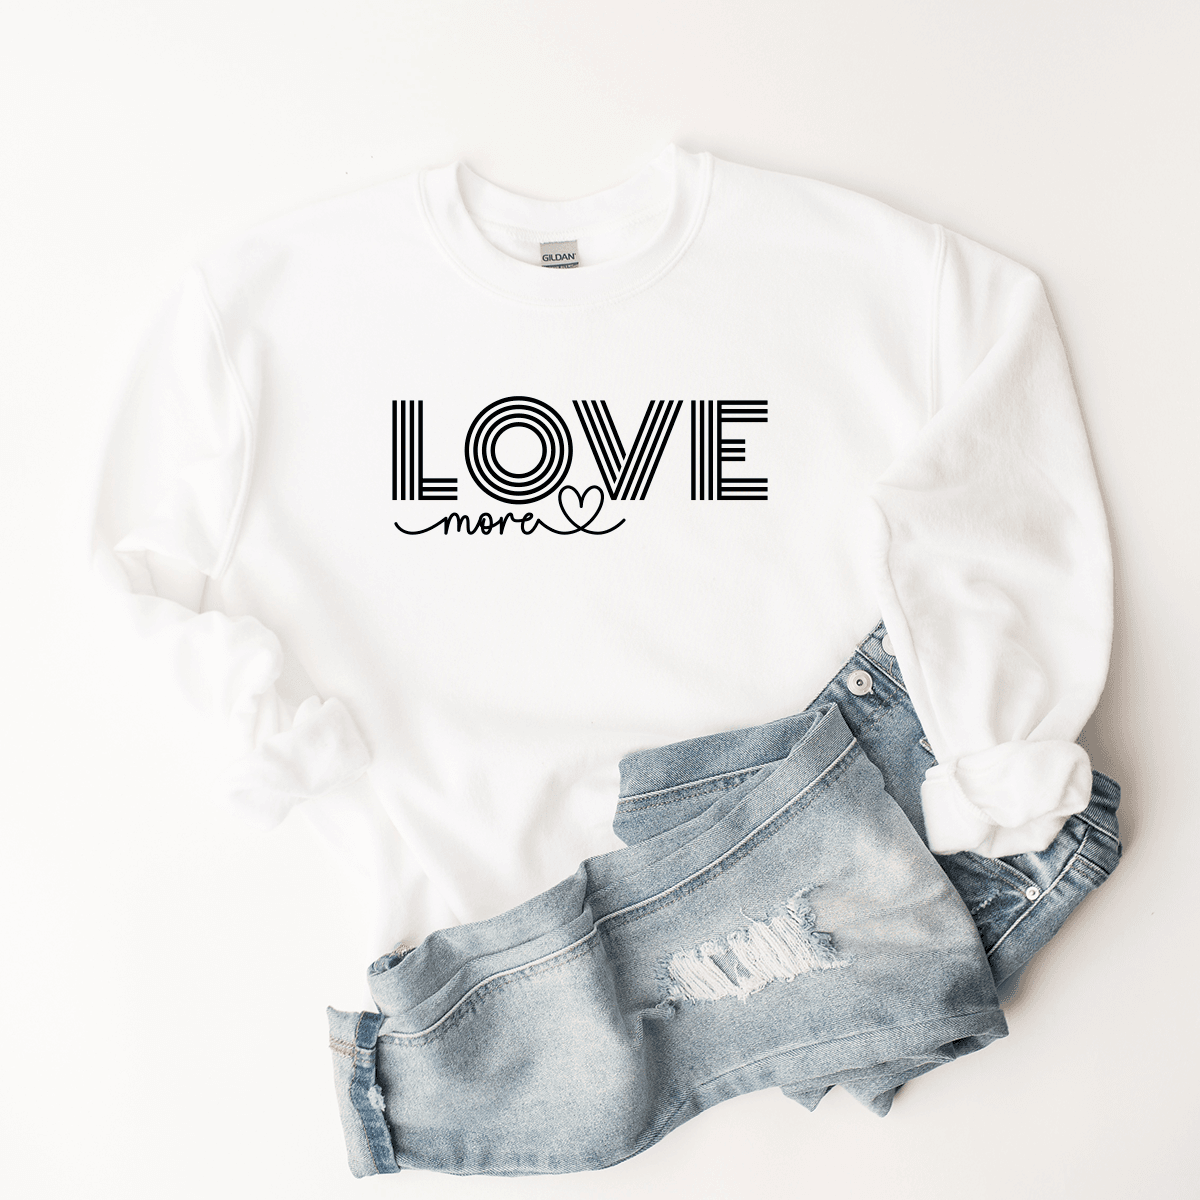 Love More - Sweatshirt